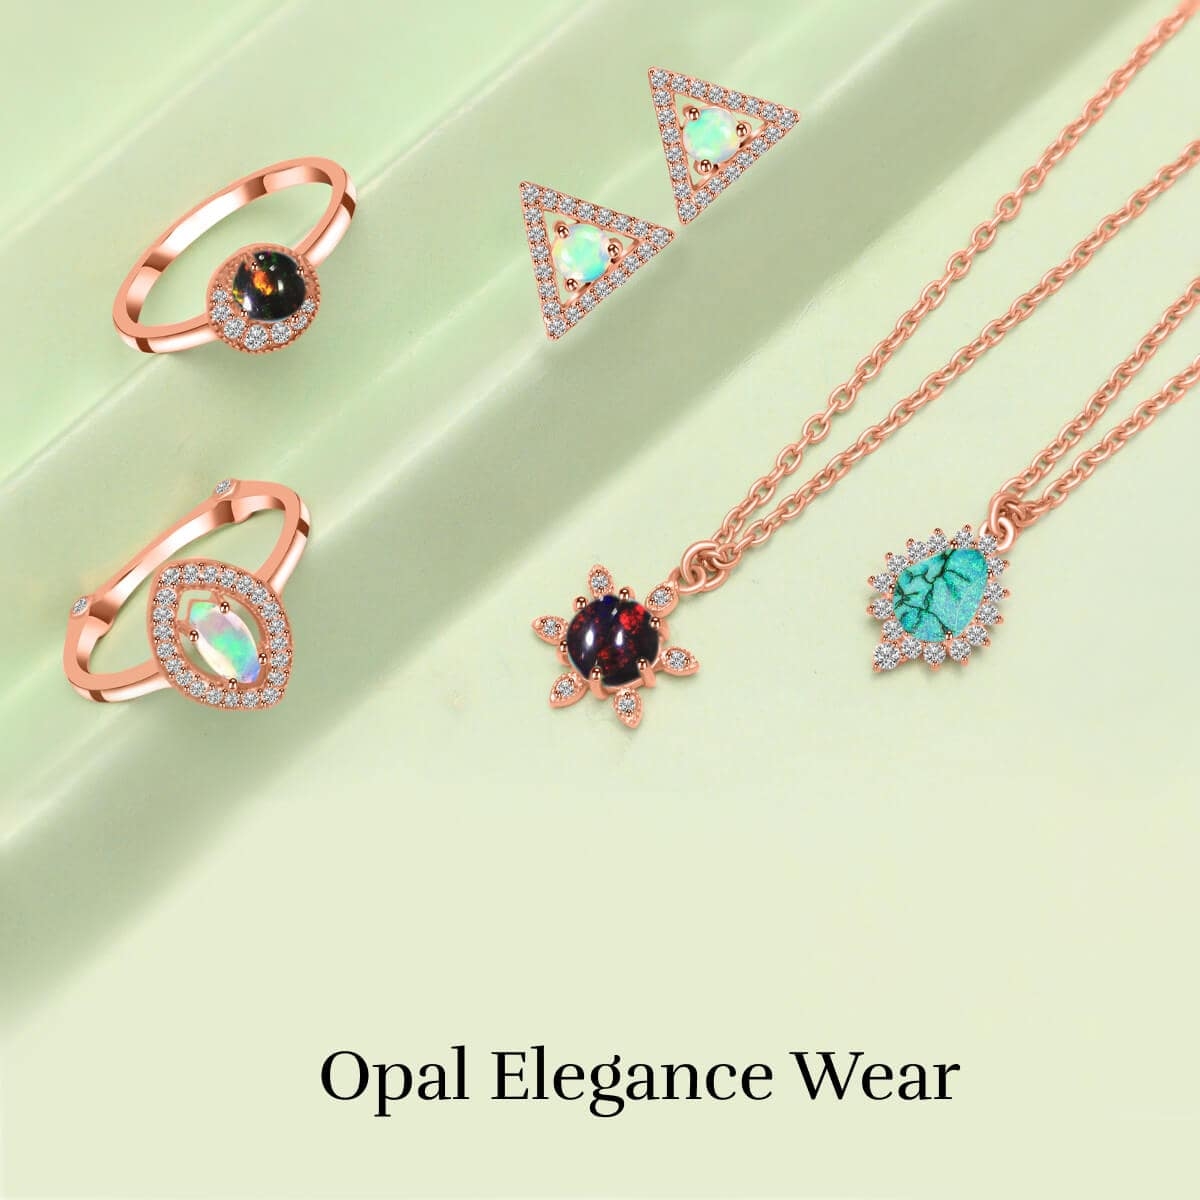 How to Wear Opal Jewelry